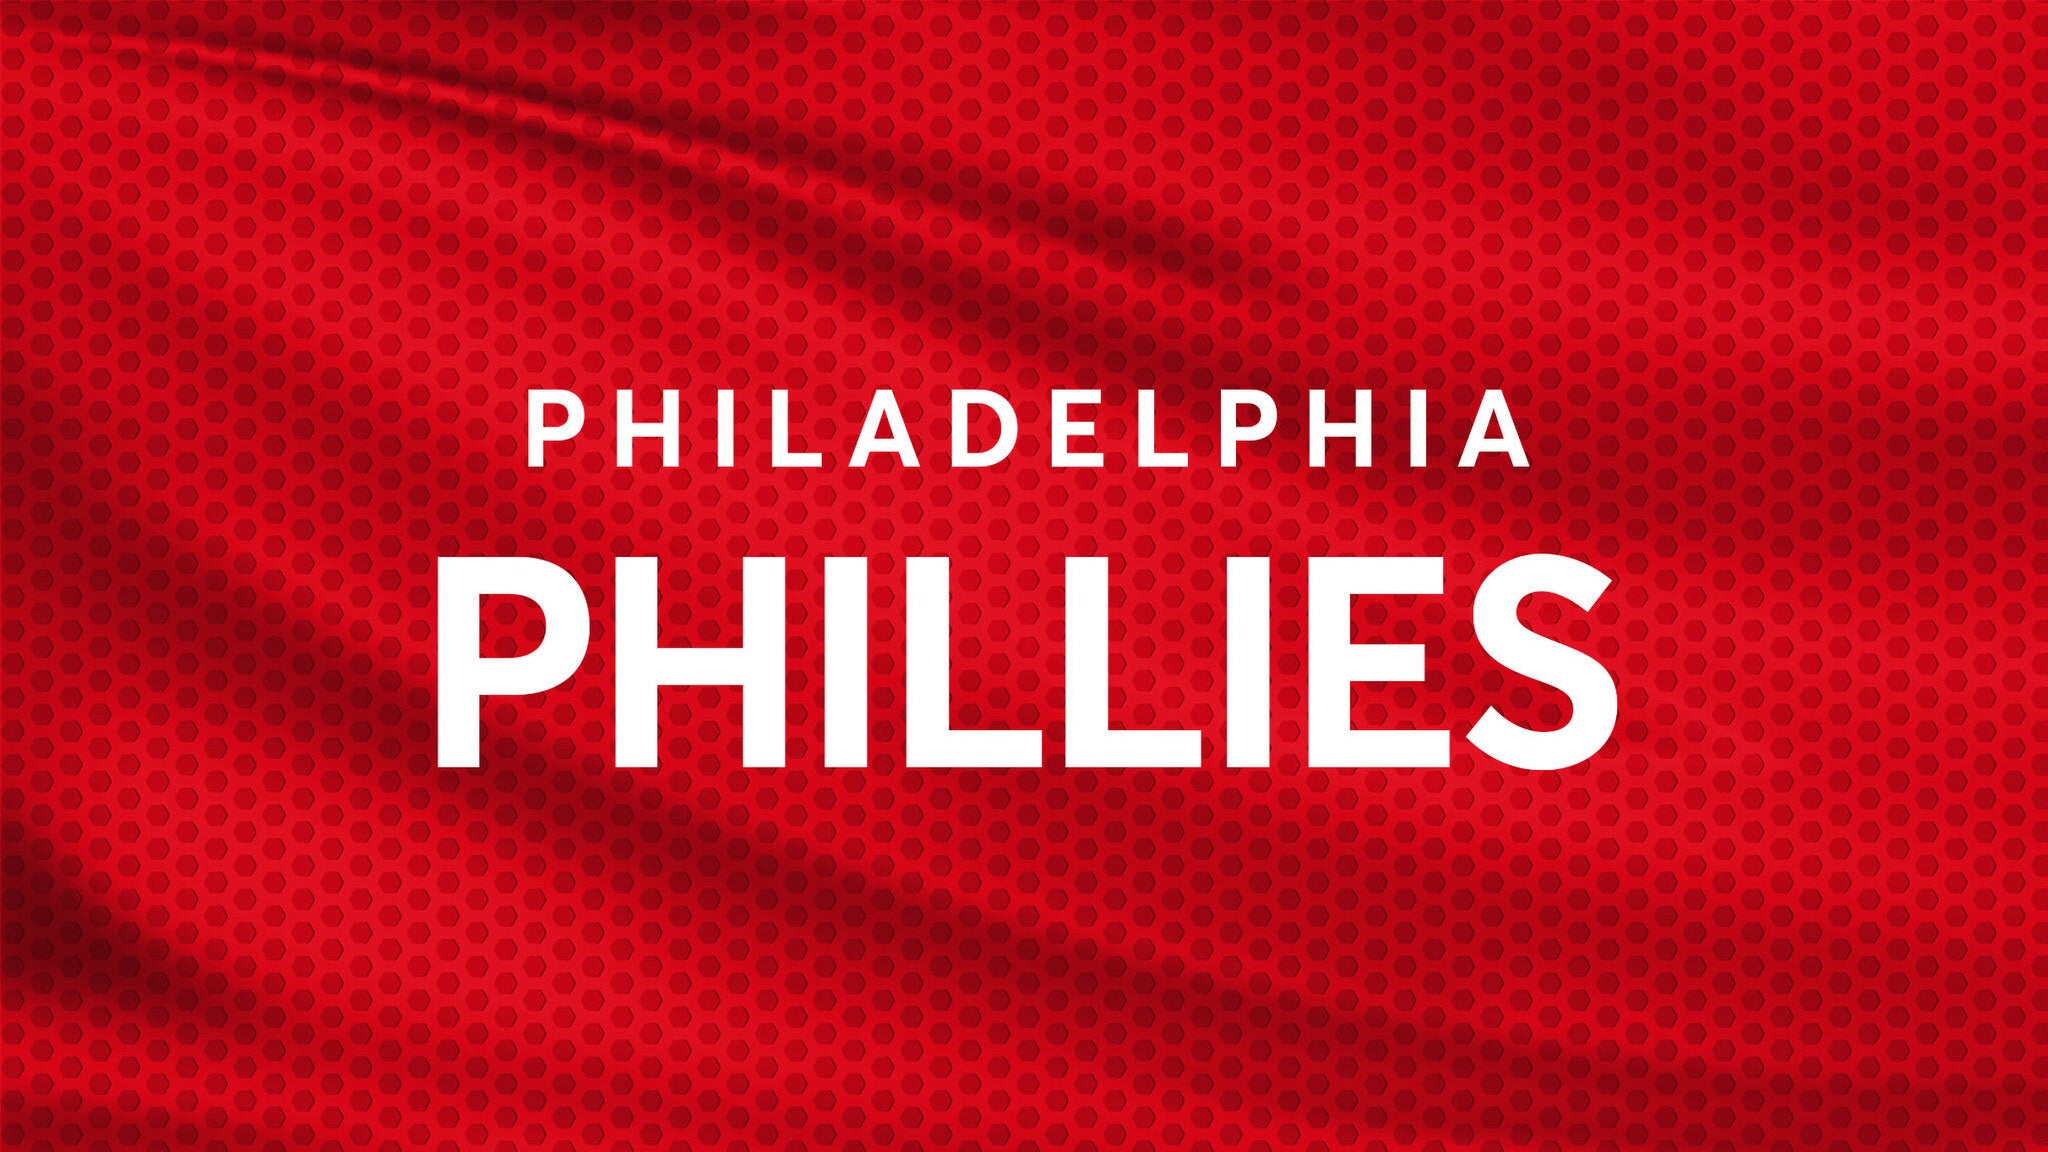 Philadelphia Phillies vs. San Francisco Giants